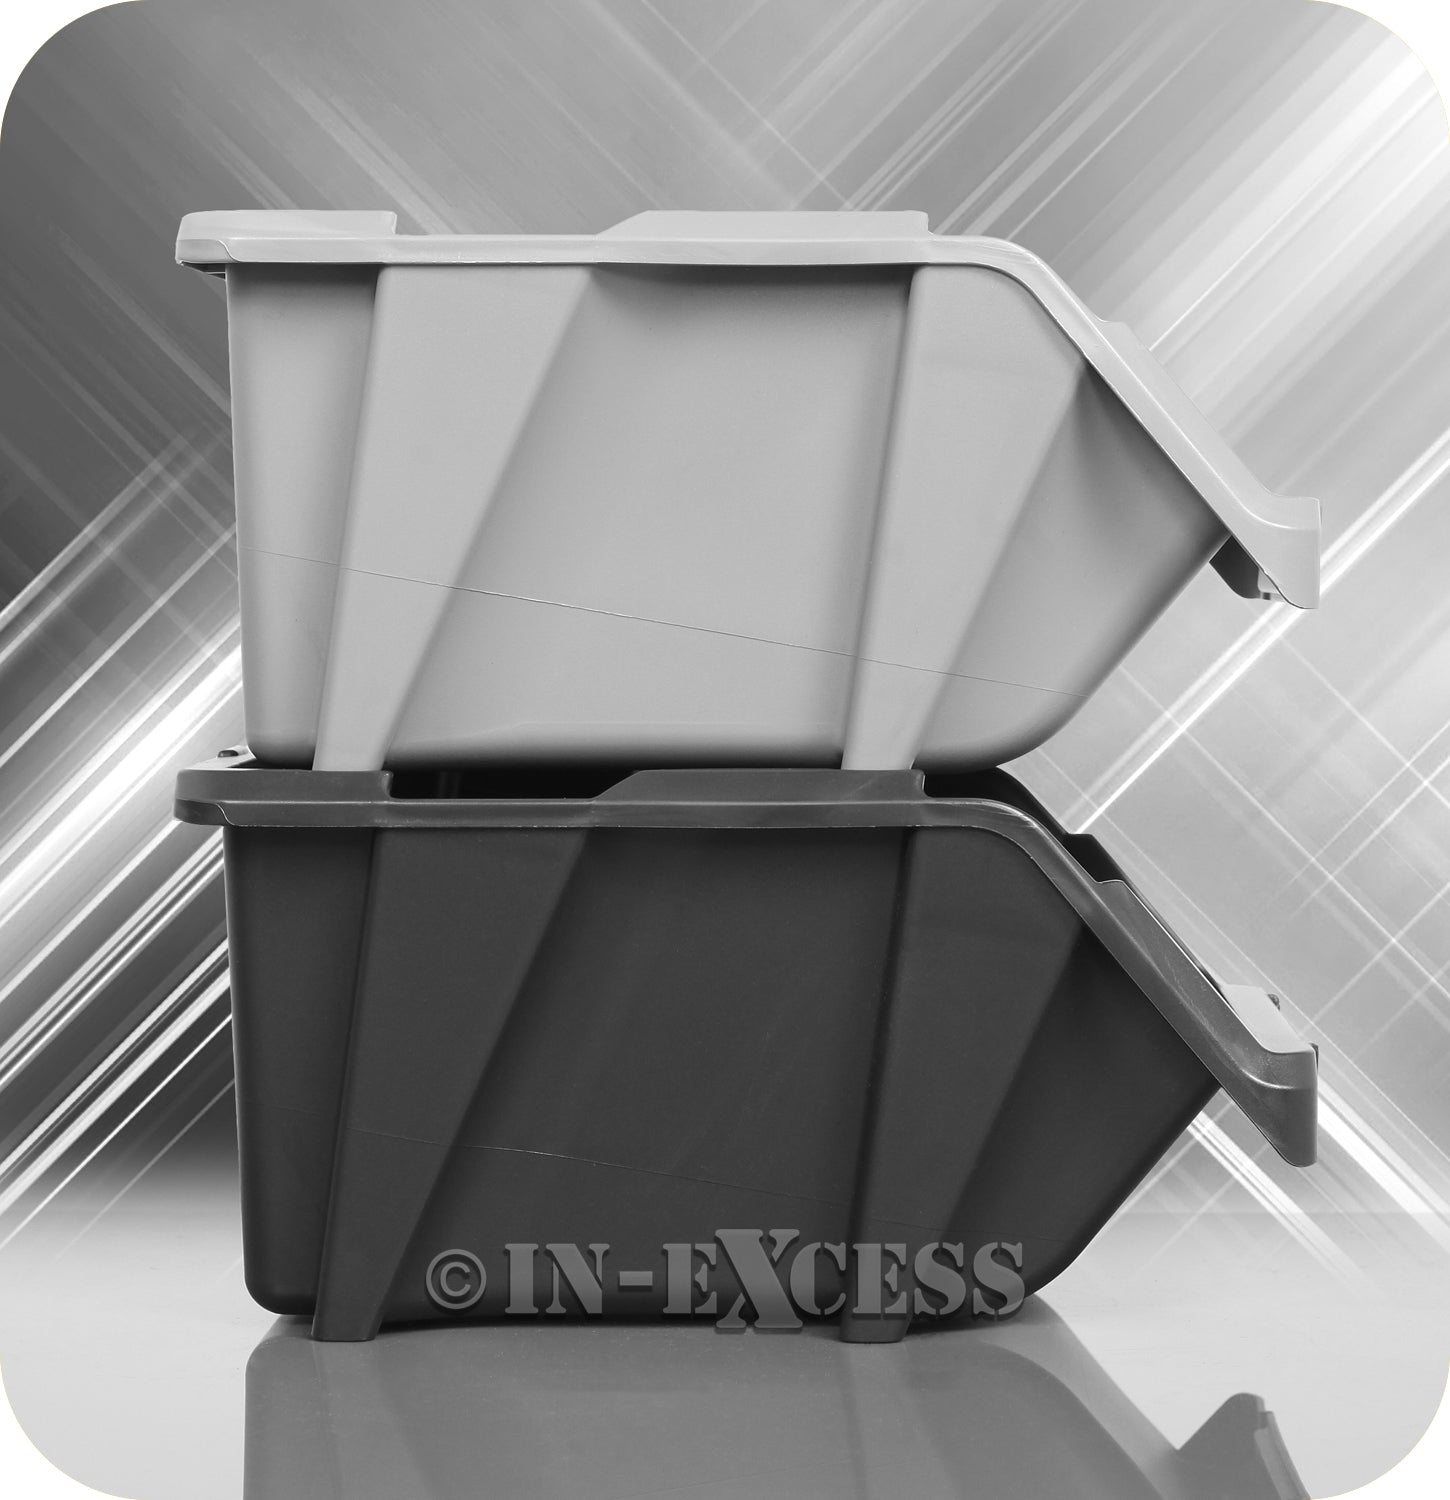 In-Excess Hardware Heavy Duty Multi-Purpose Small Stackable Storage Bin - Black